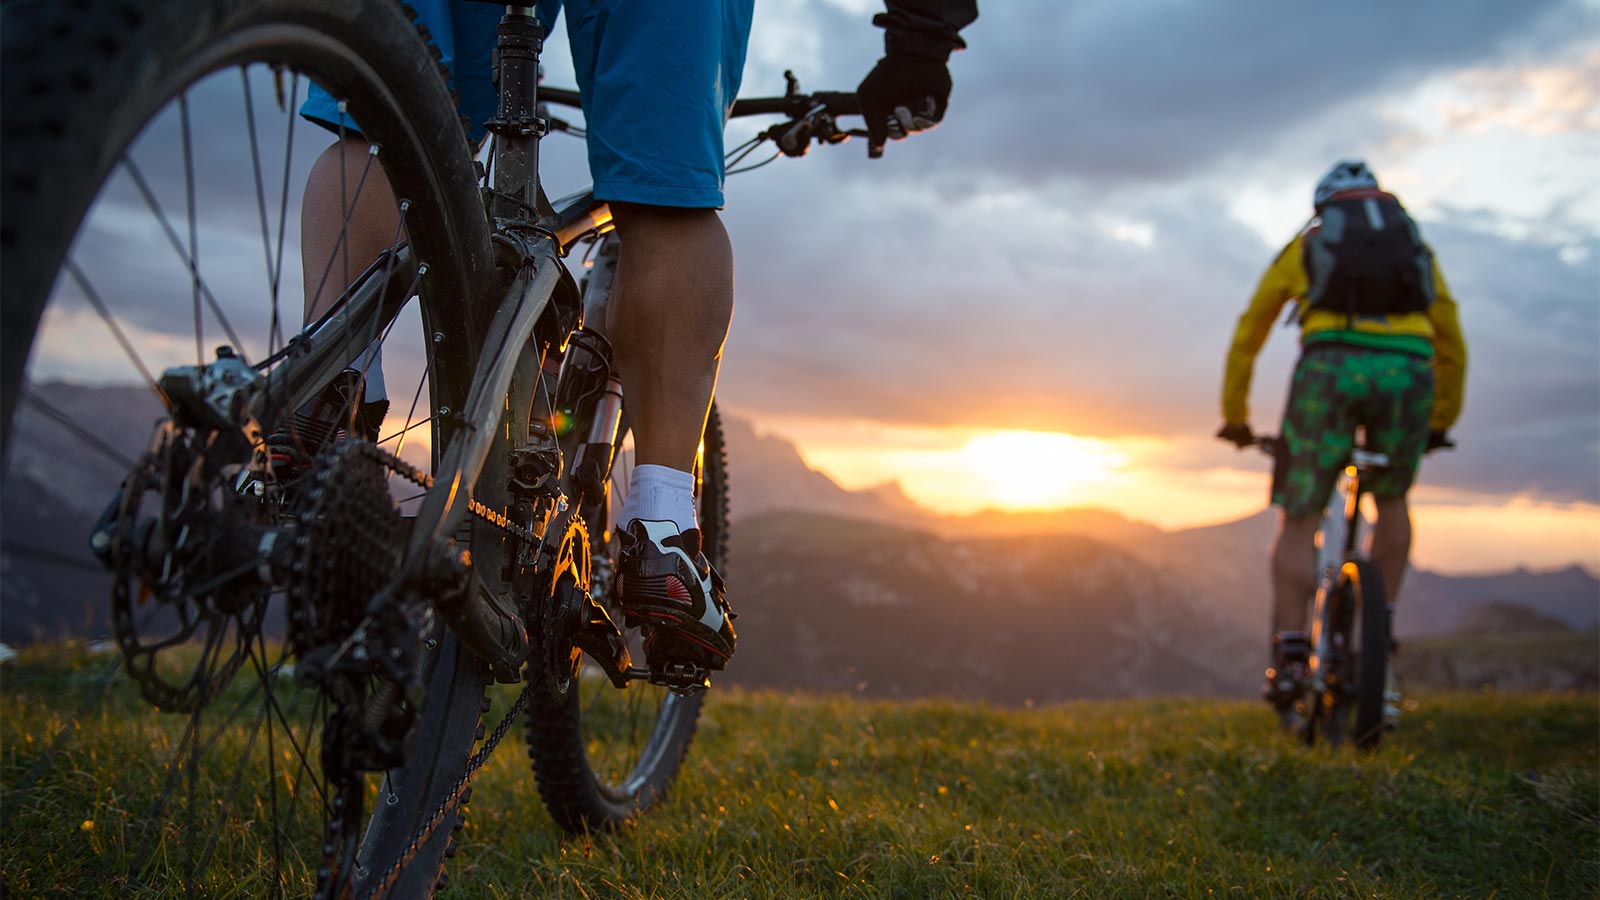 Cyclists enjoy the sunset over an idyllic landscape